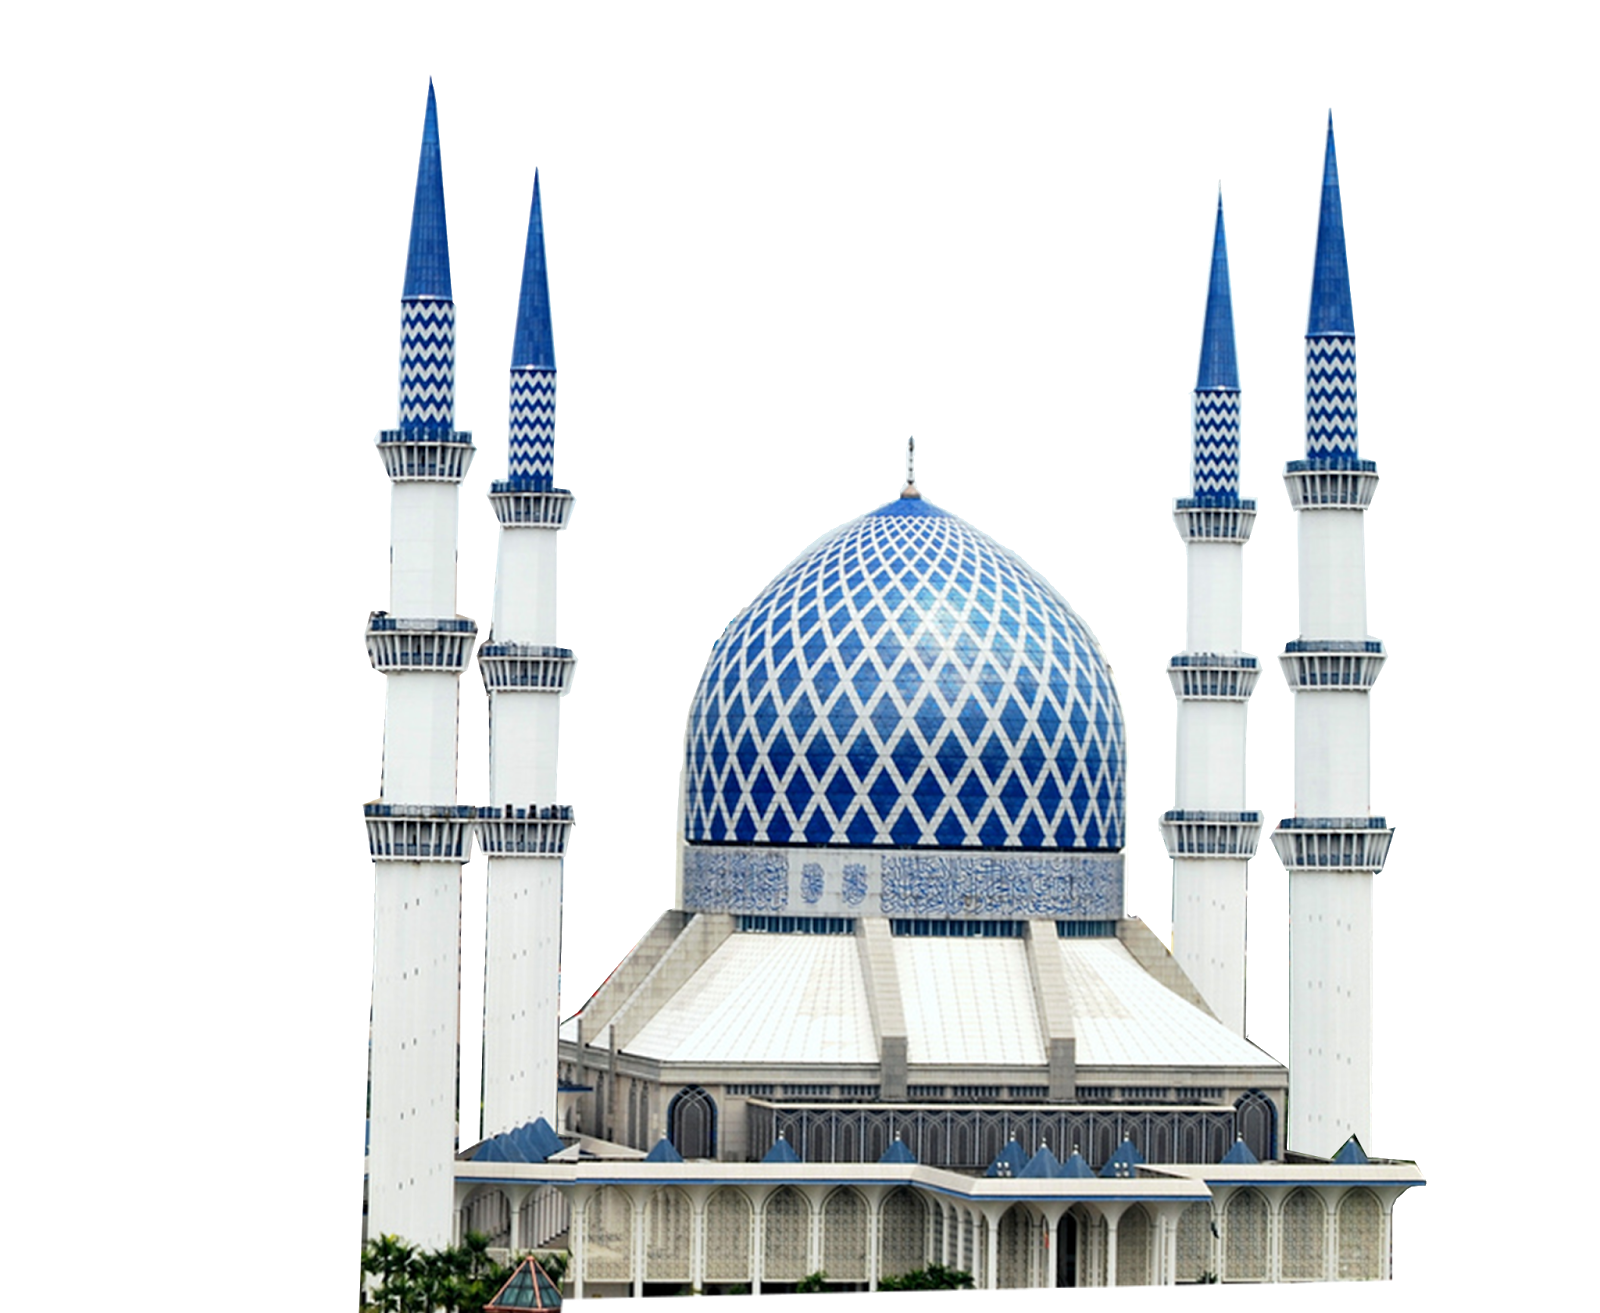 Mezquita PNG